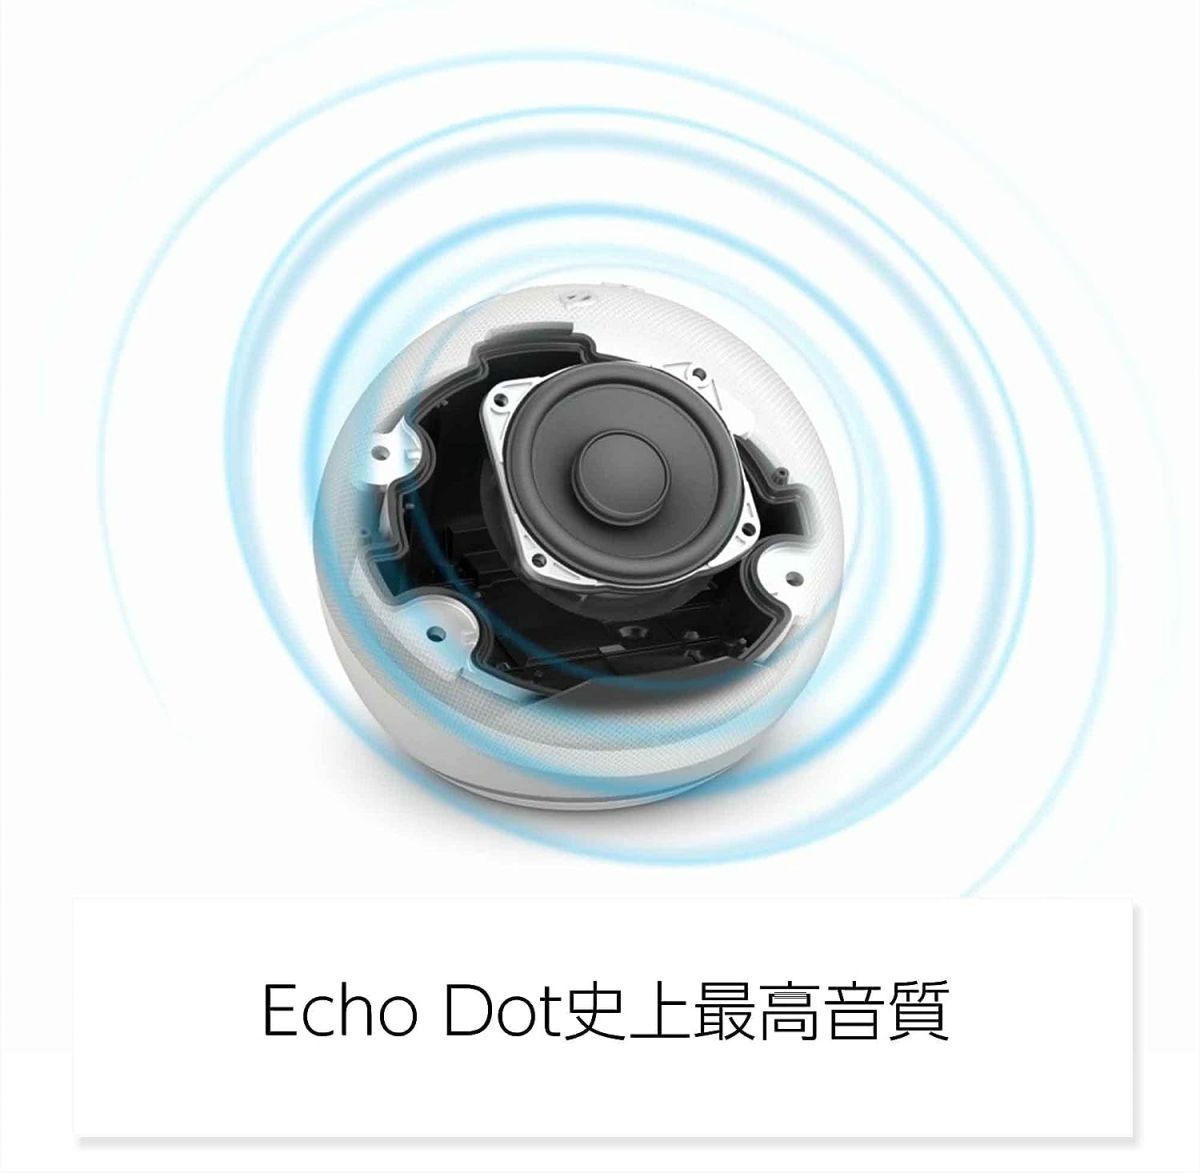 Echo Dot (エコードット) 第5世代